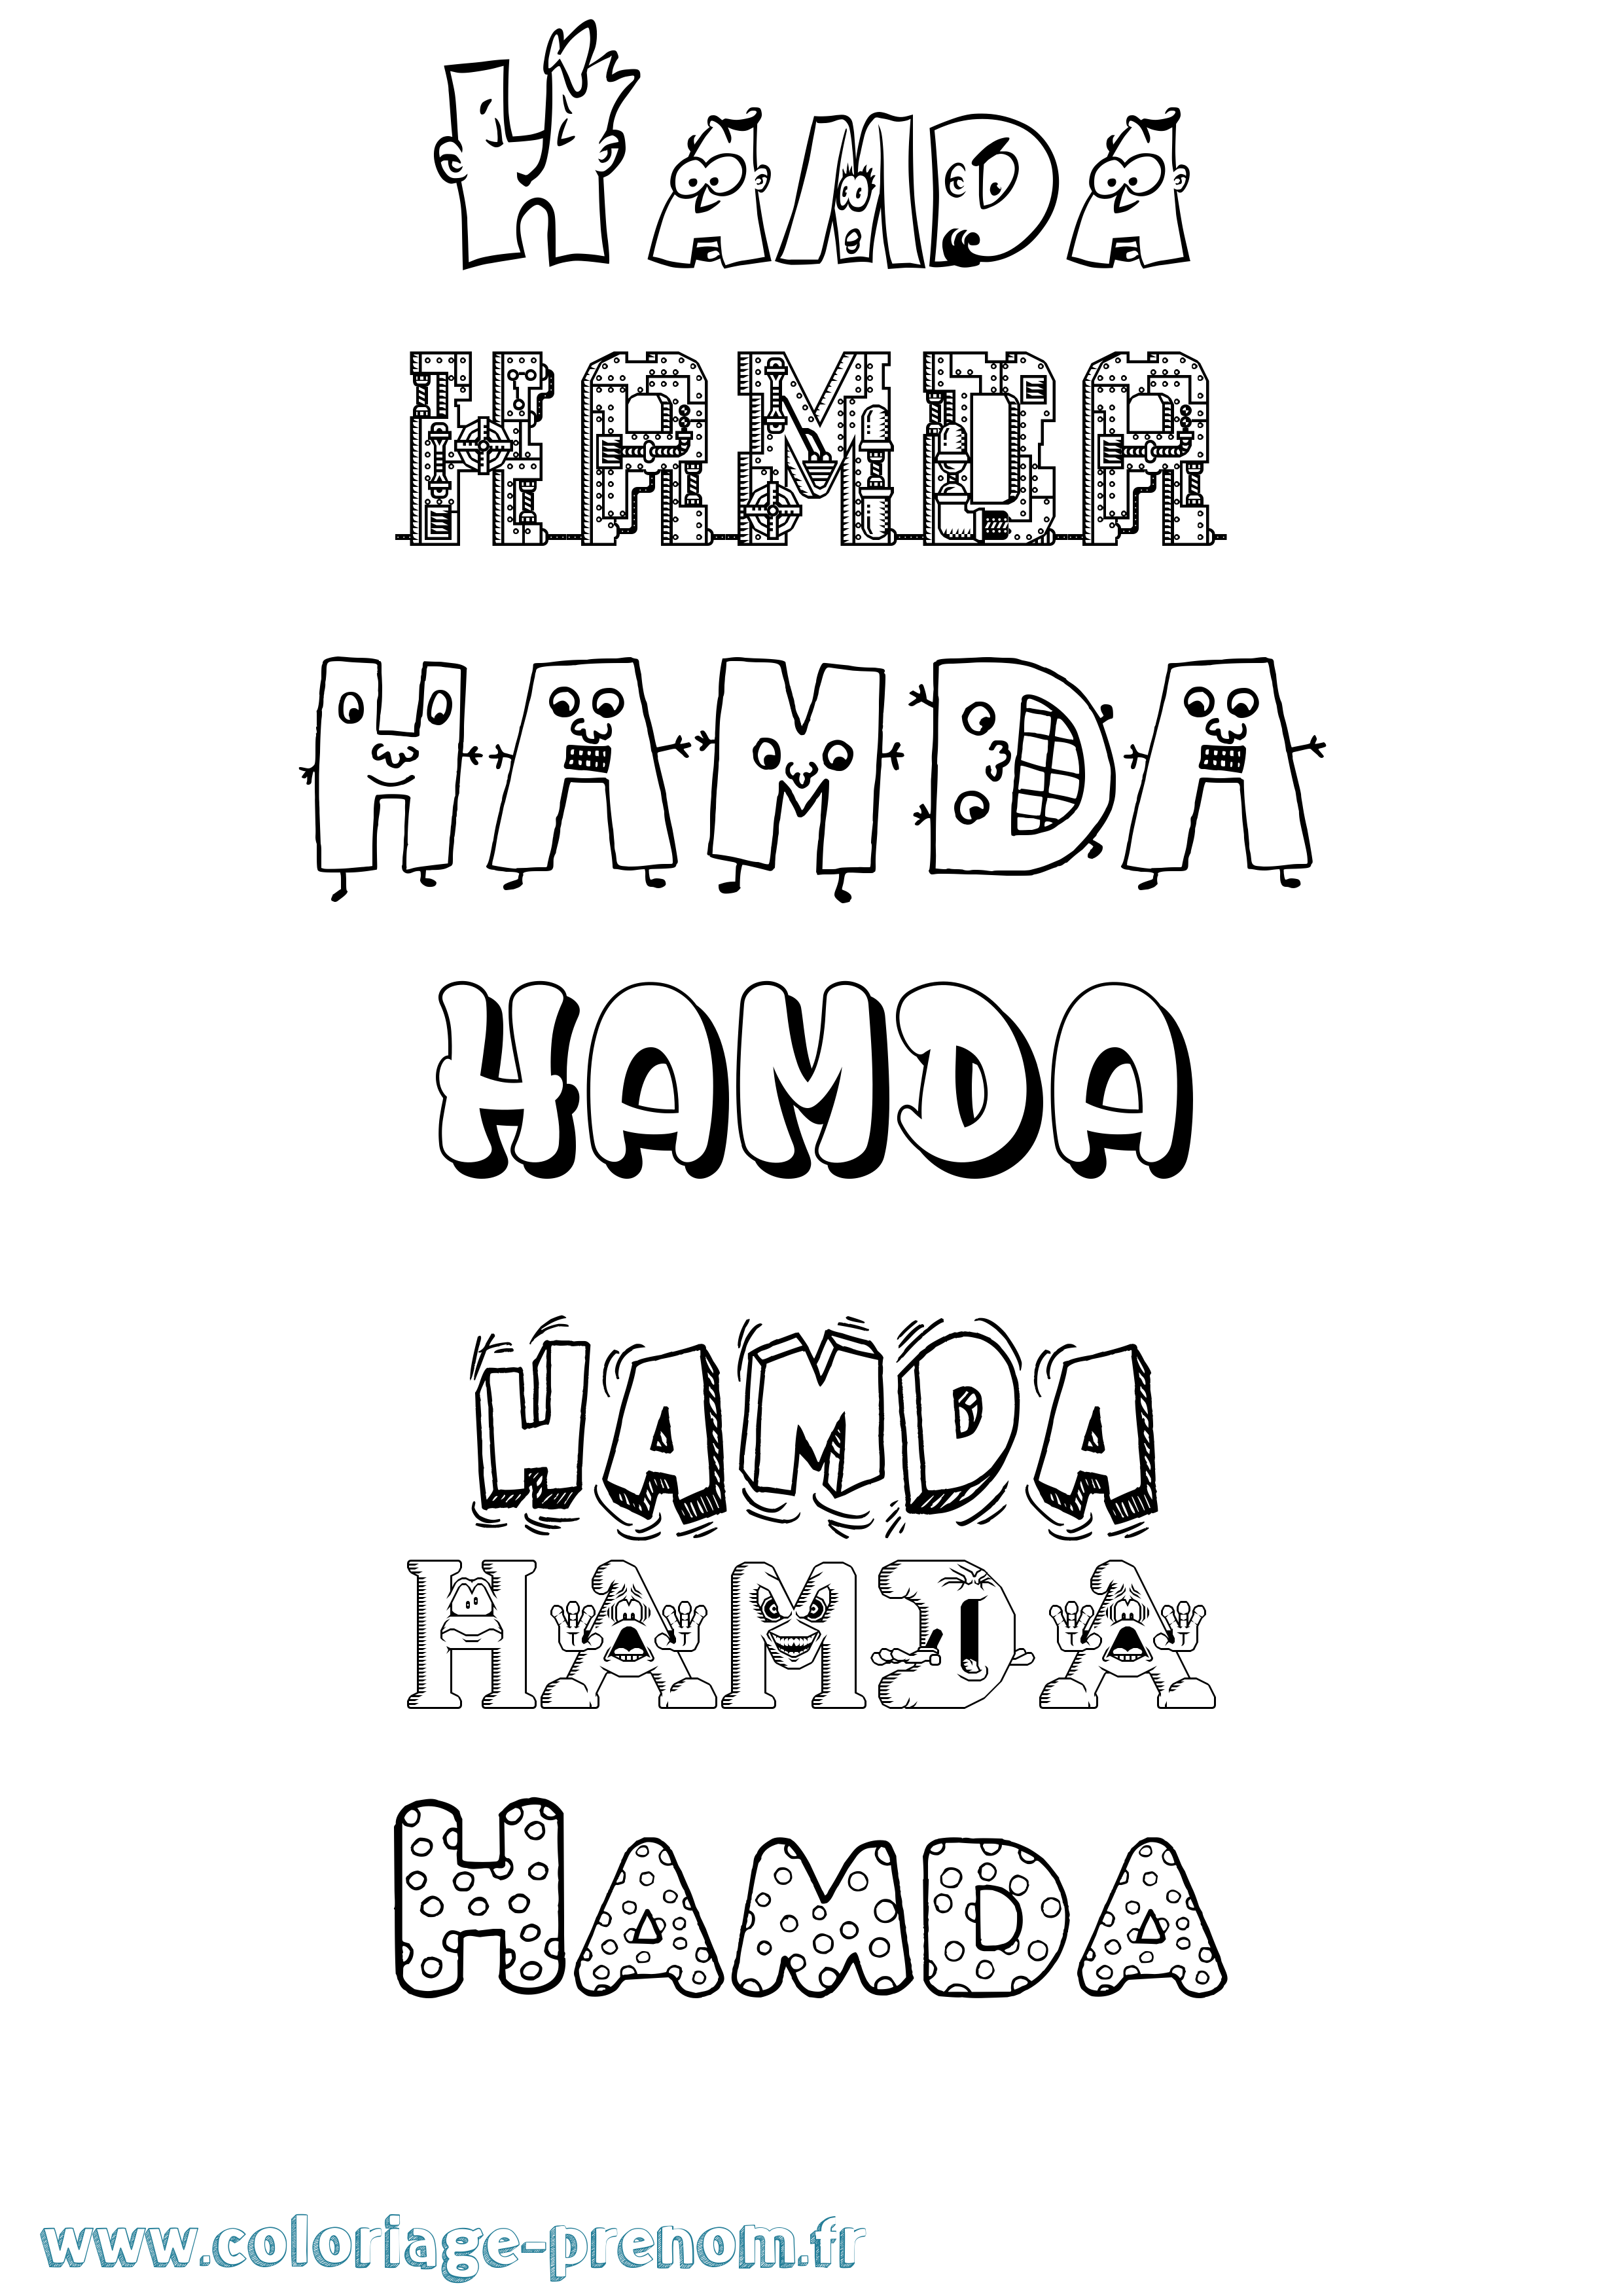 Coloriage prénom Hamda Fun